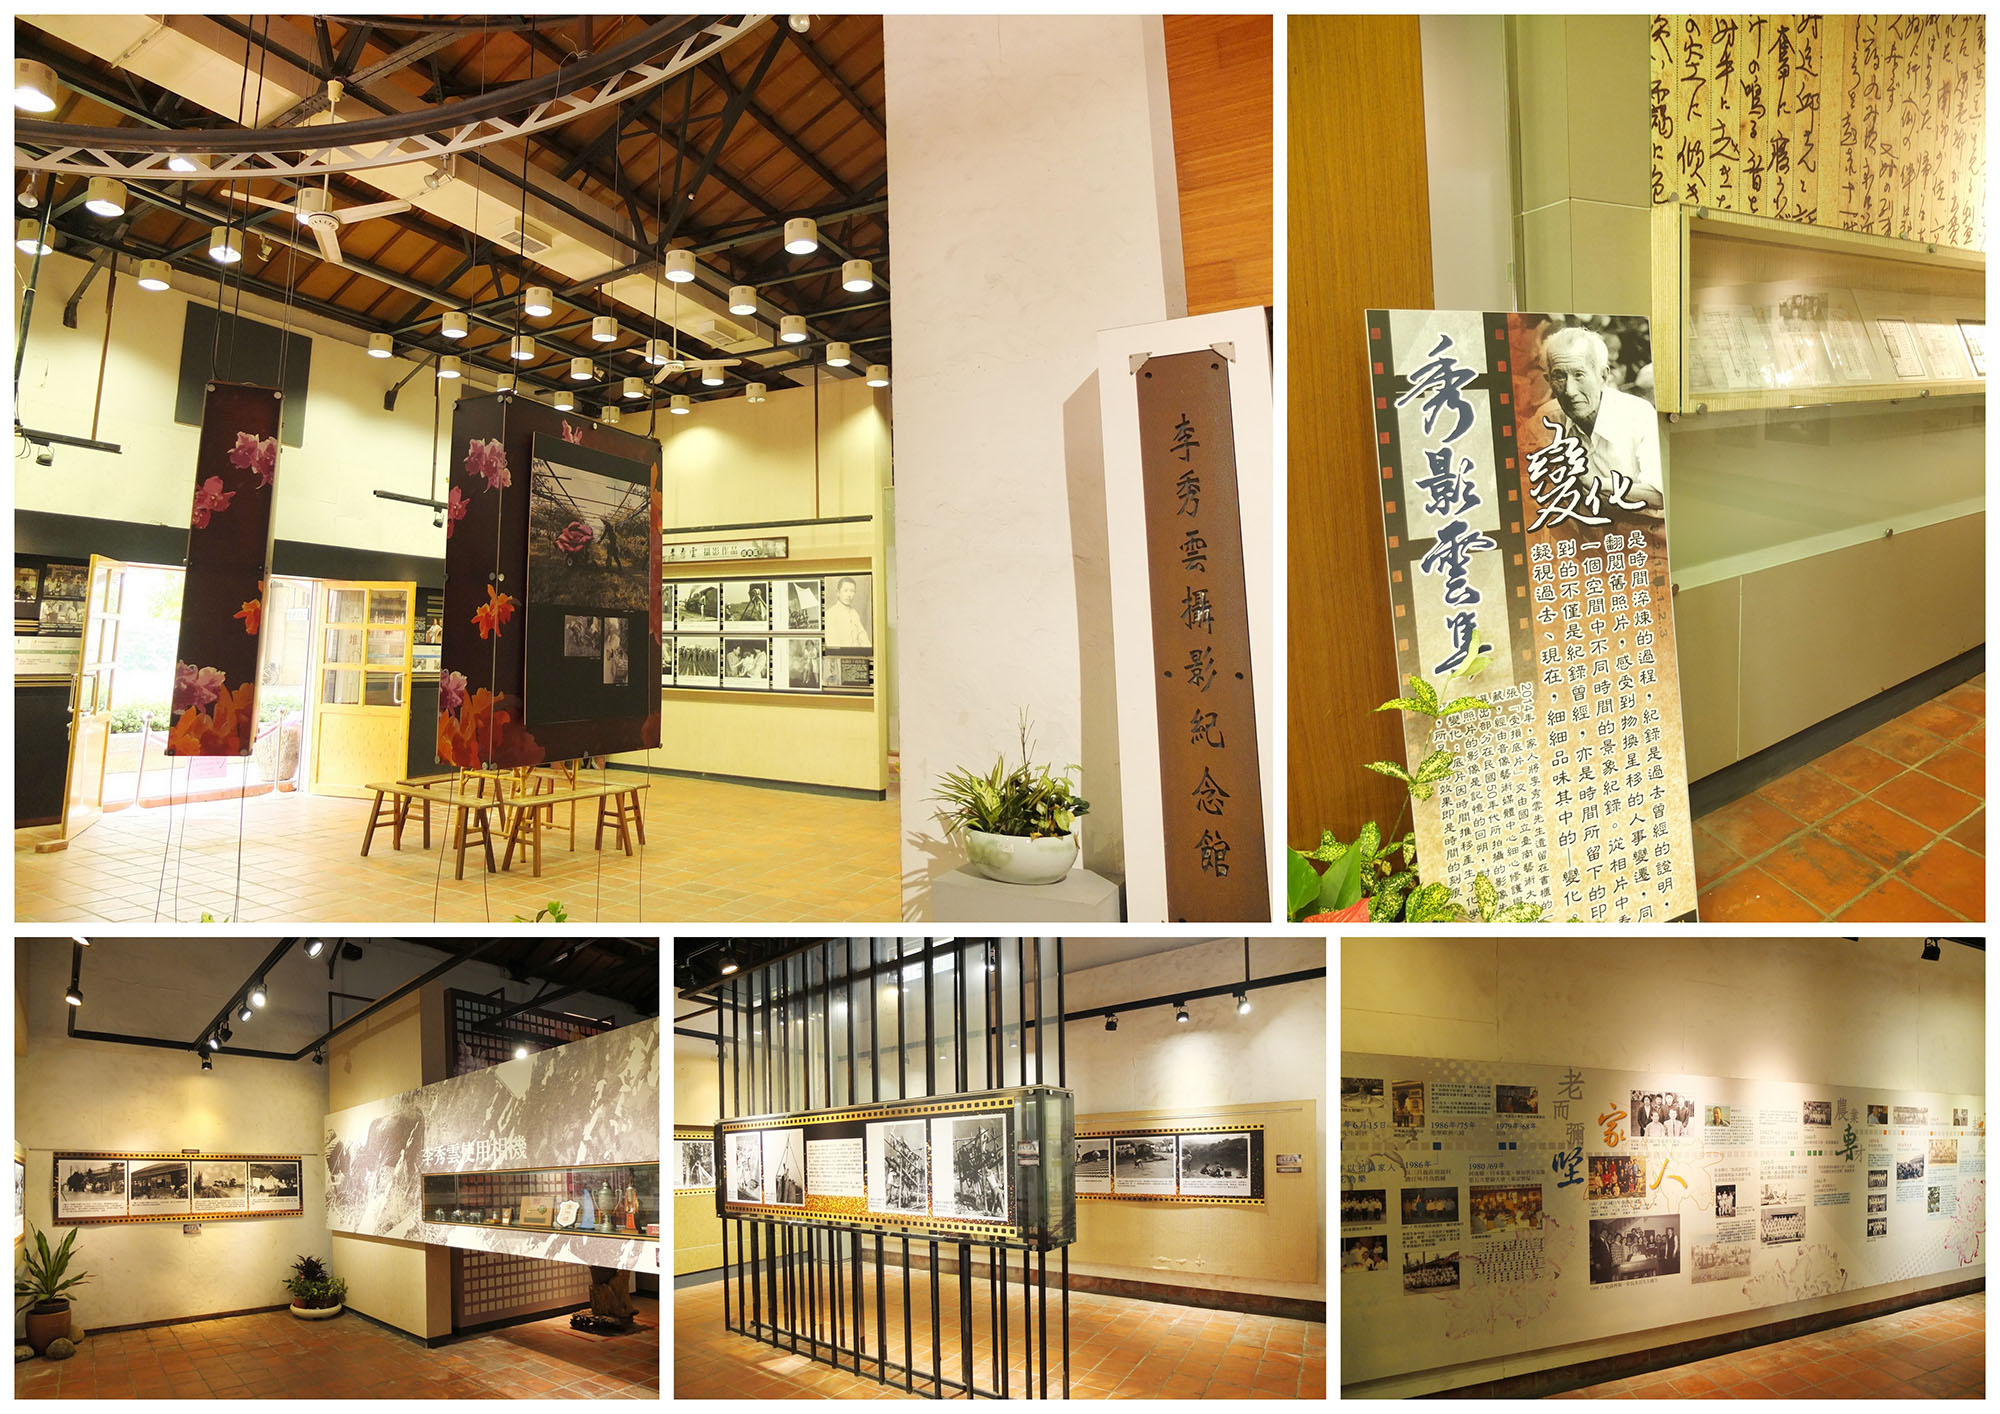 Mr. Li Xiu-yun's Photography Memorial Hall